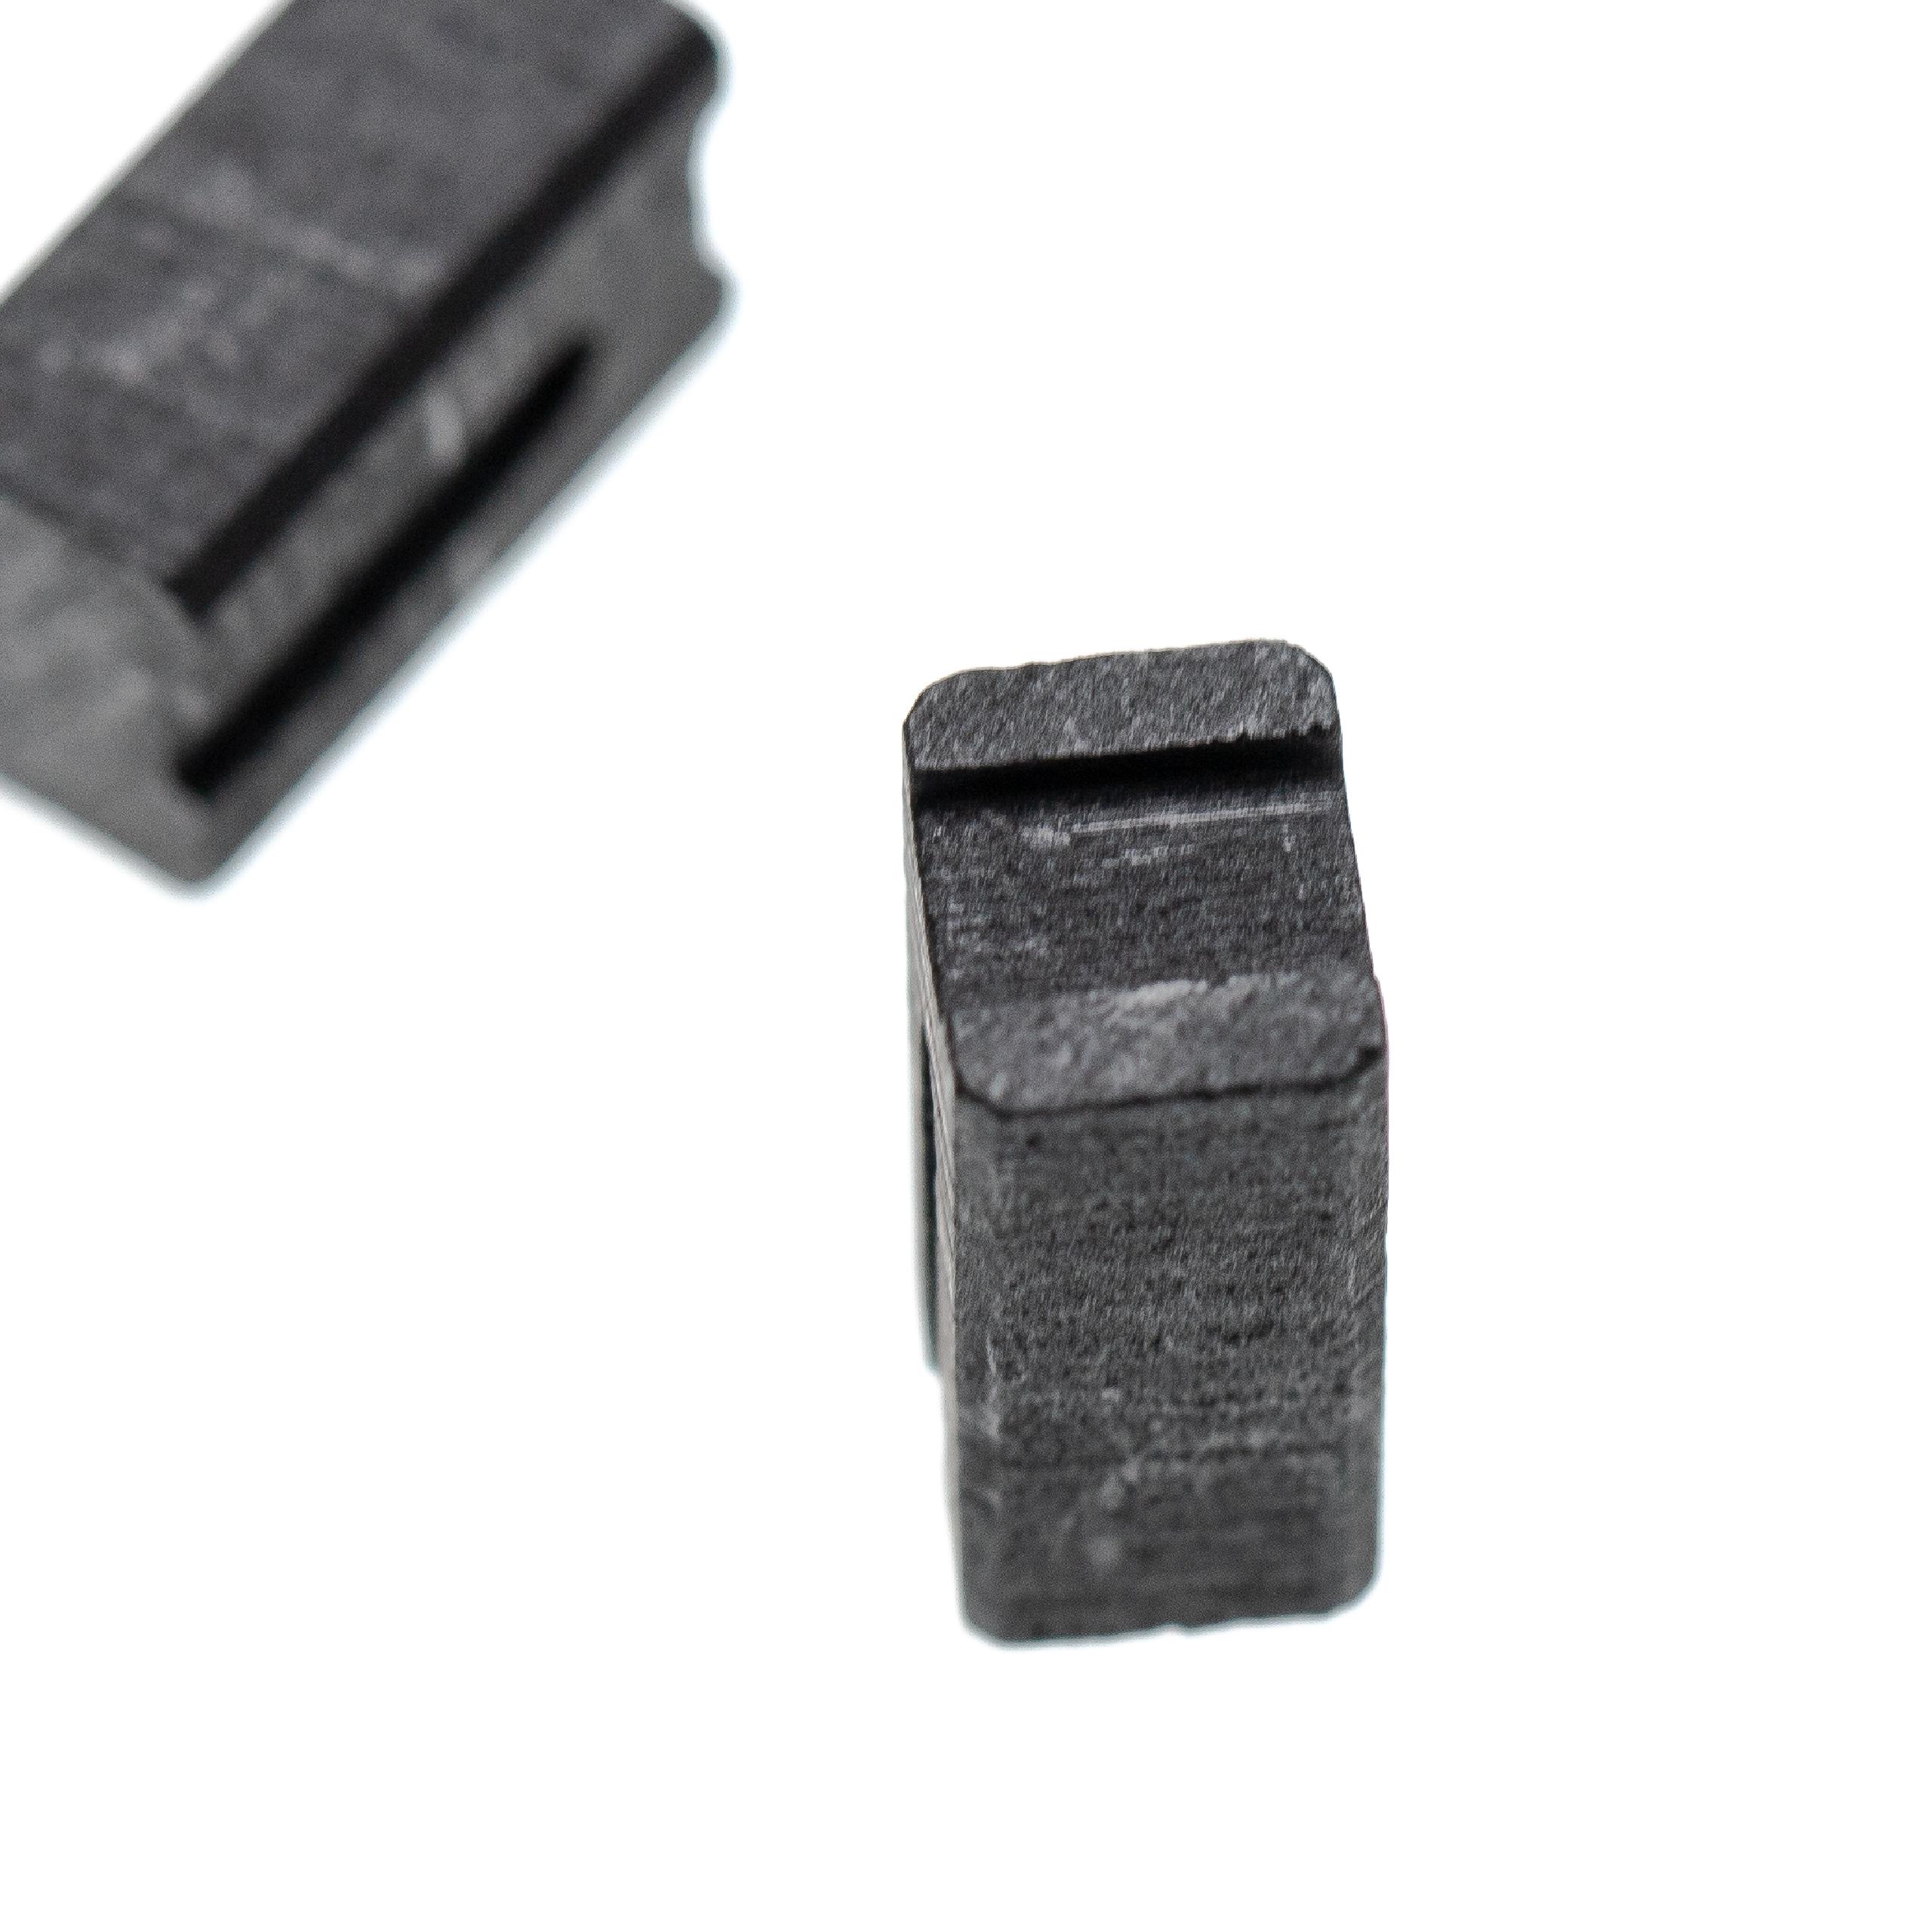 2x Spazzola carbone sostituisce Dewalt 176846-04, 176846-03, 176846-02 per utensili, 13,2 x 6,2 x 7,9 mm